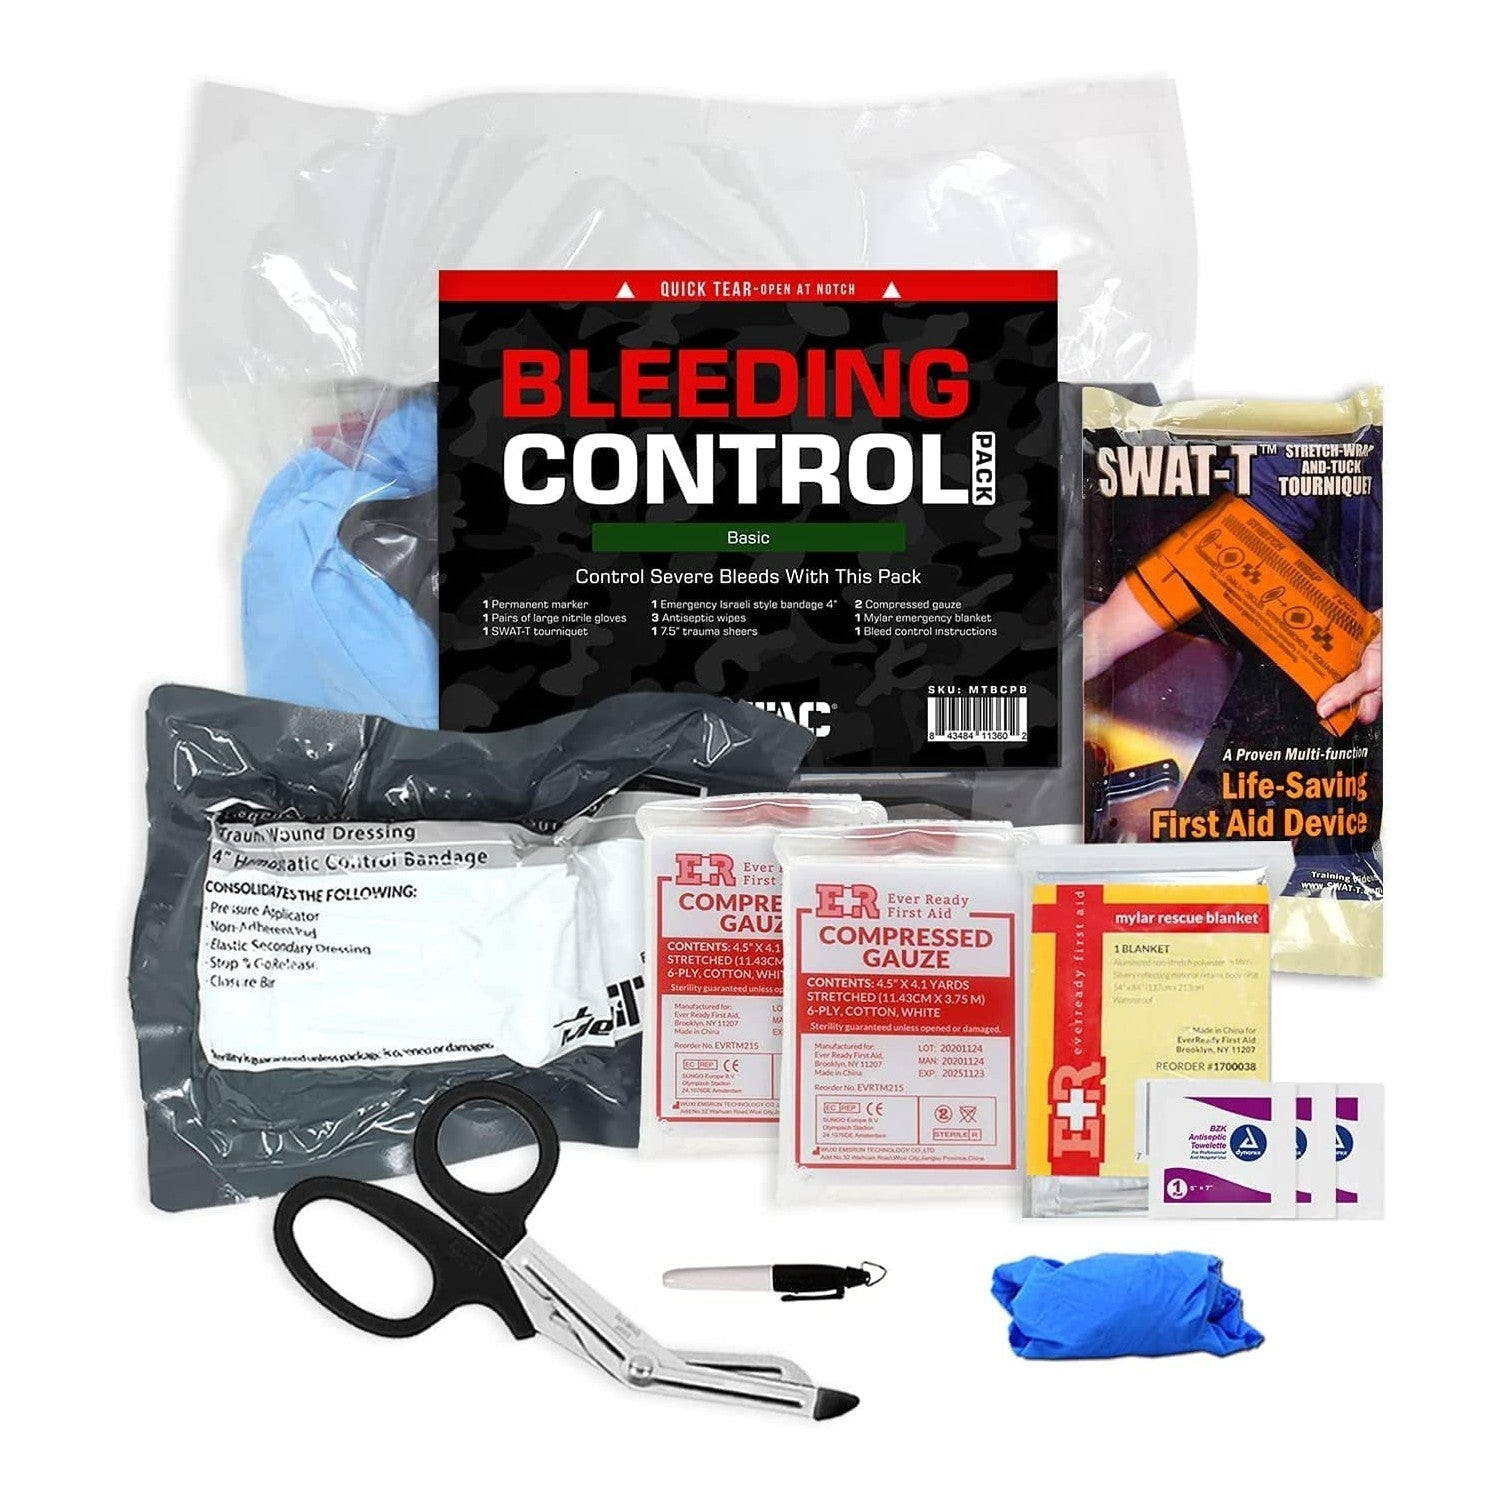 For Bleeders emergency kit in the women's bathroom at my work :  r/TrollXChromosomes